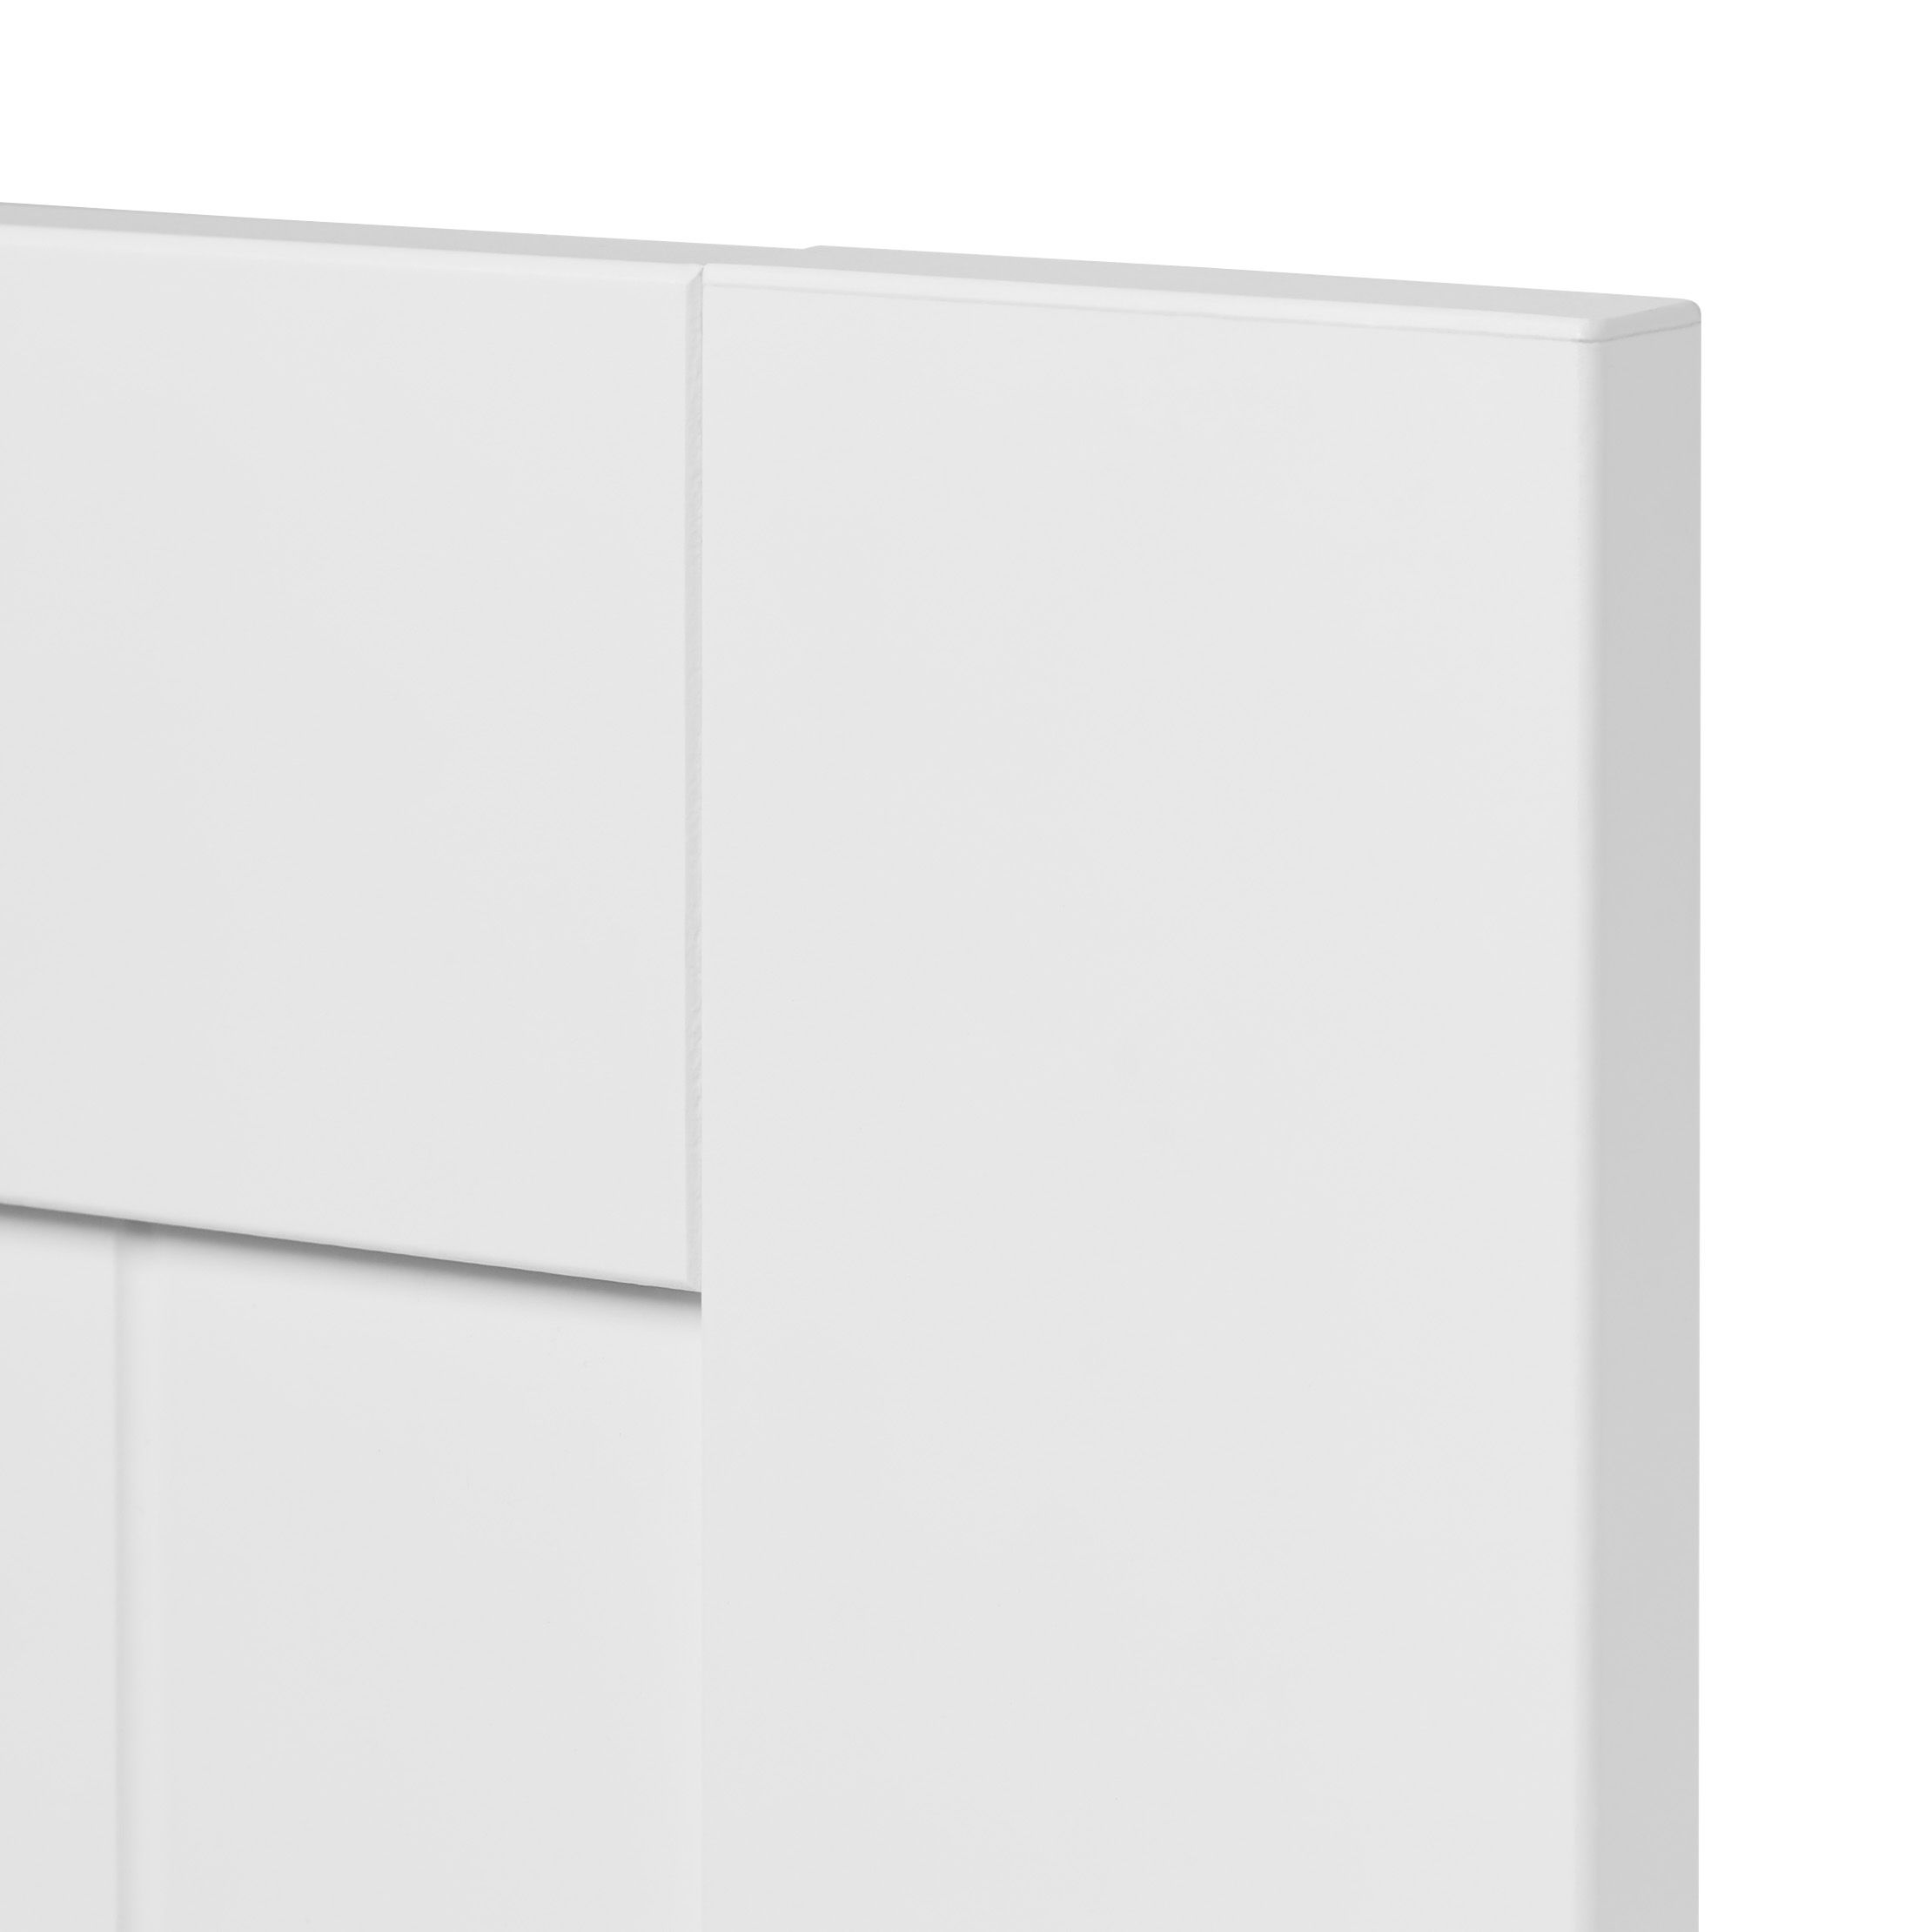 GoodHome Alpinia Matt white tongue & groove shaker Appliance Cabinet door (W)600mm (H)626mm (T)18mm